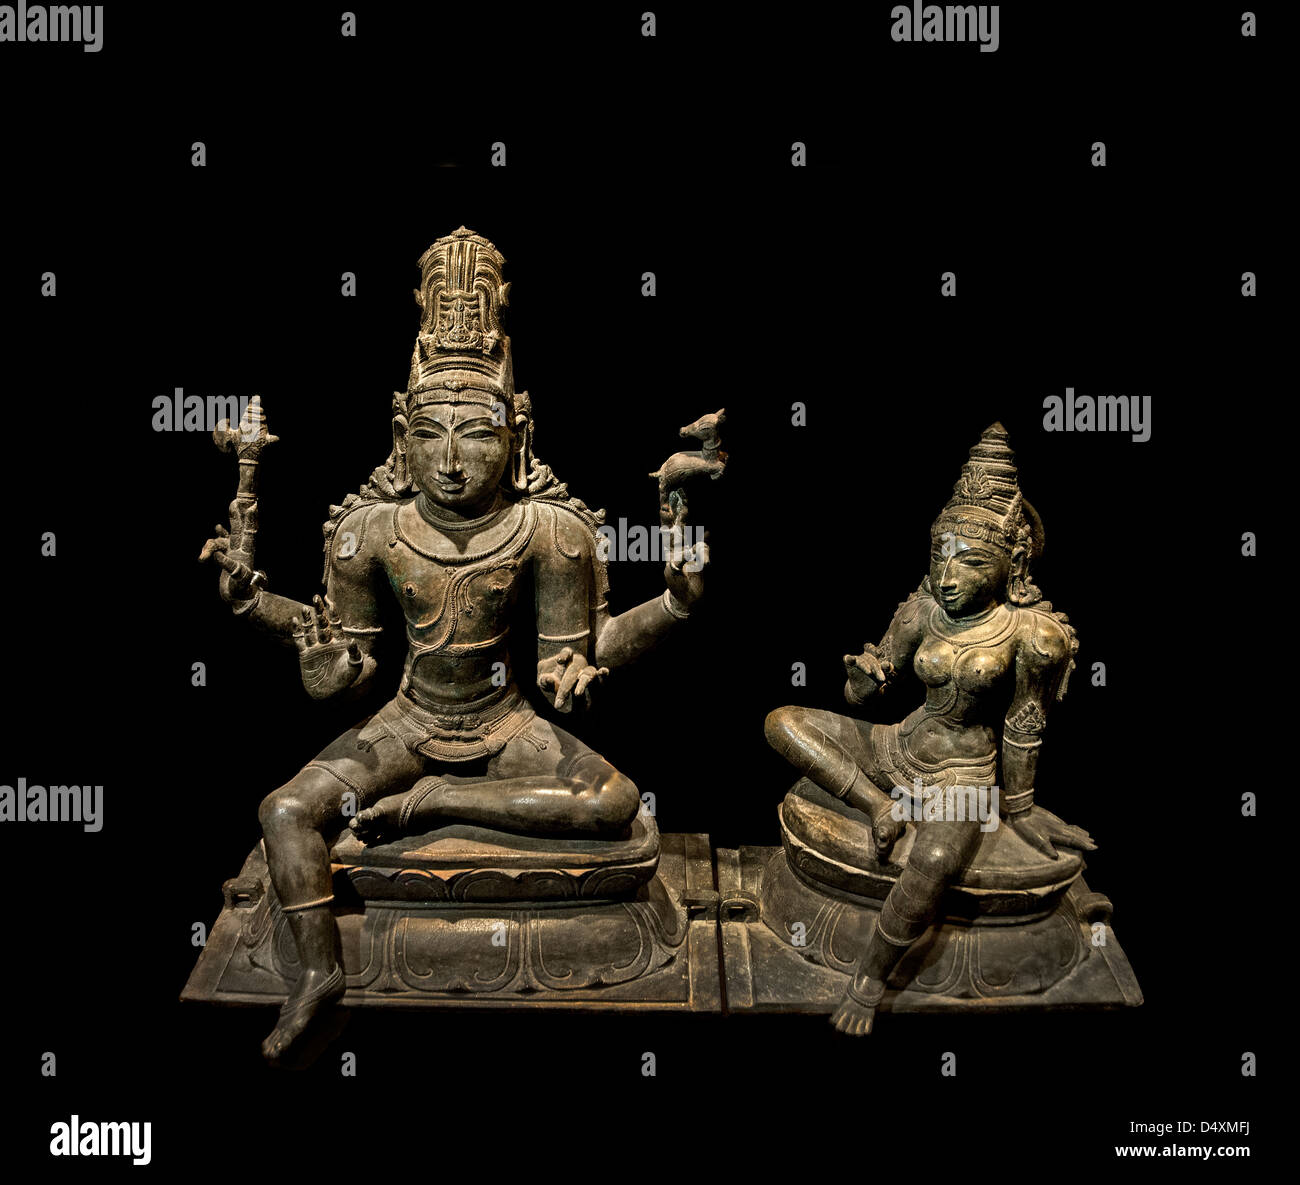 Umasahita 10th Century AD Sikkil Nagappattinam Hindu Bronze India Stock Photo